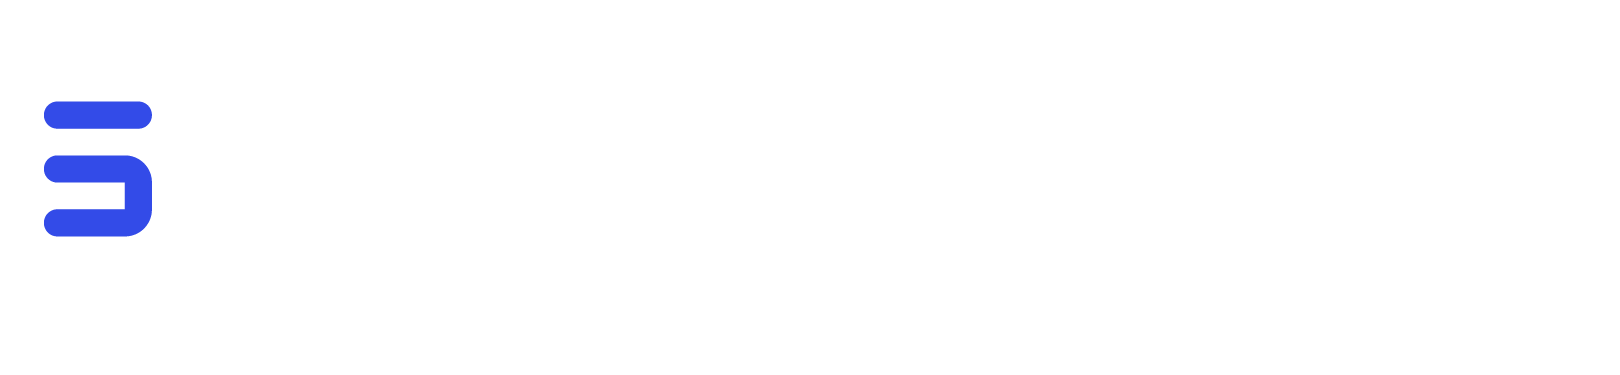 Sigmagency logo